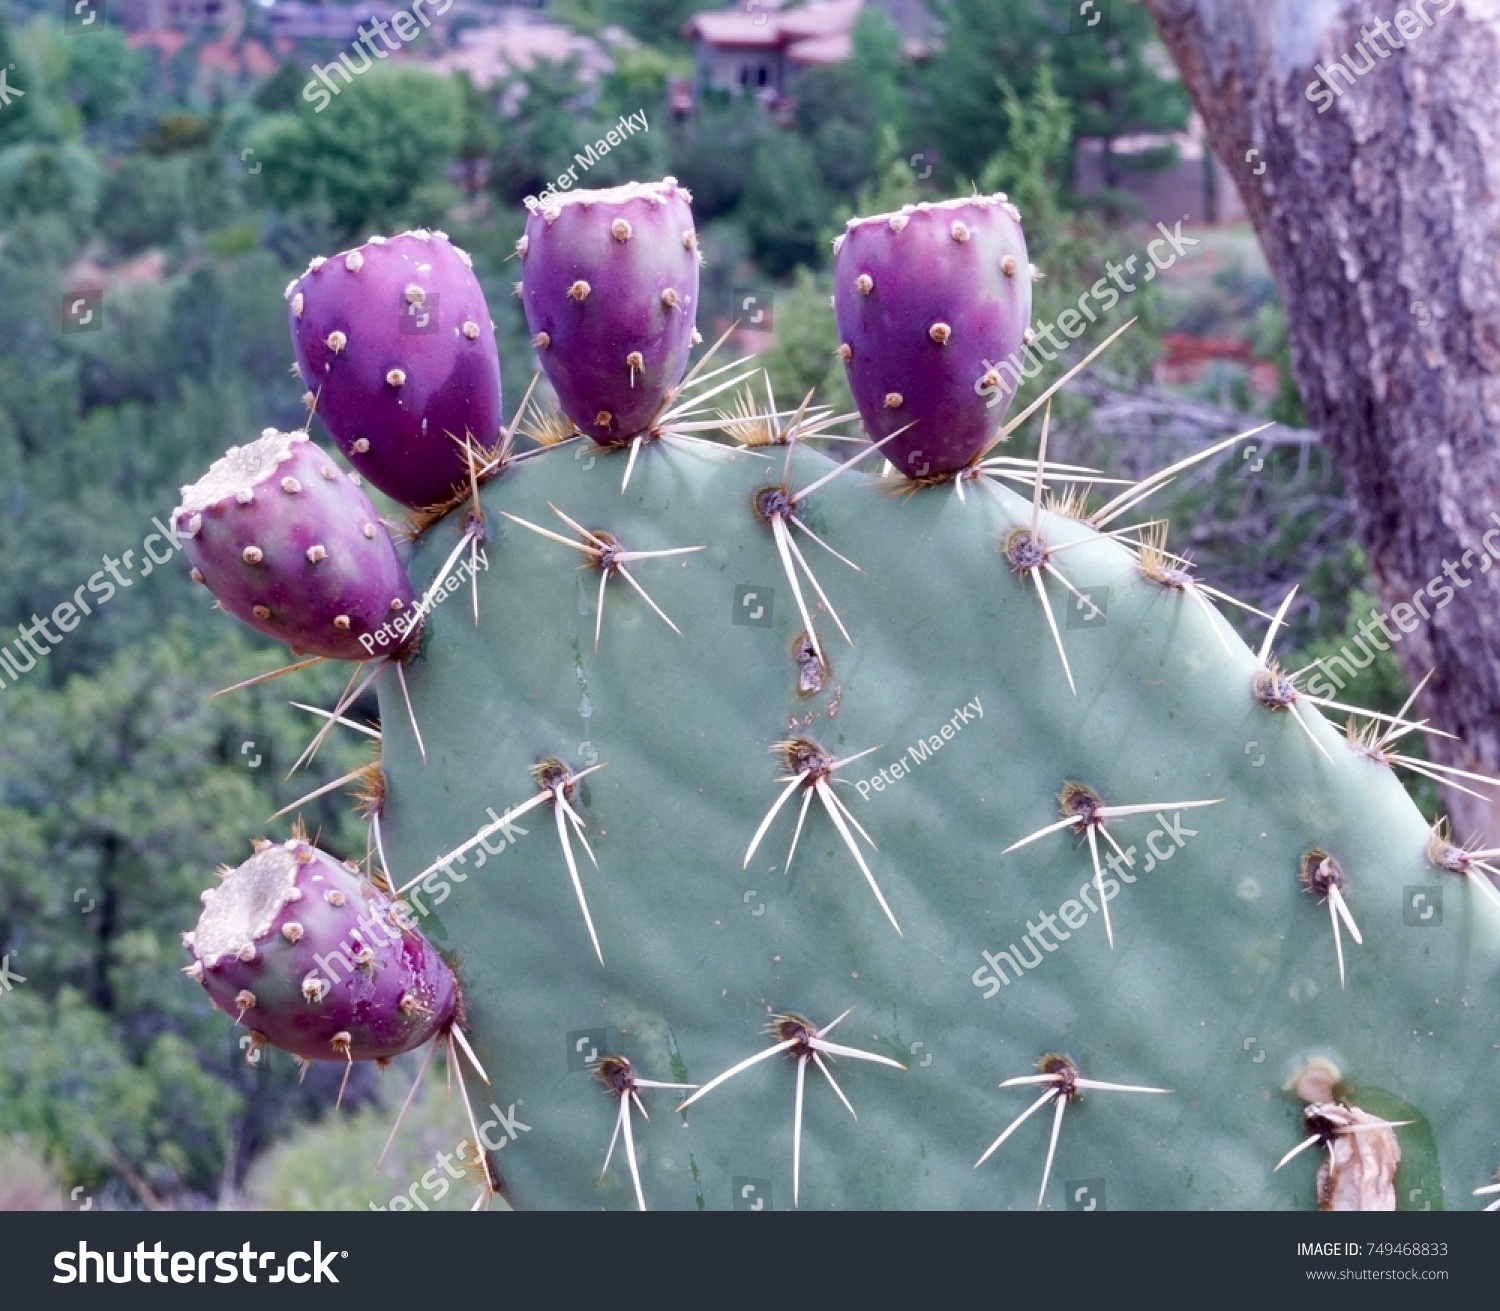 Purple Prickly Pear Cactus Fruit Growing Stock Photo Edit Now 749468833